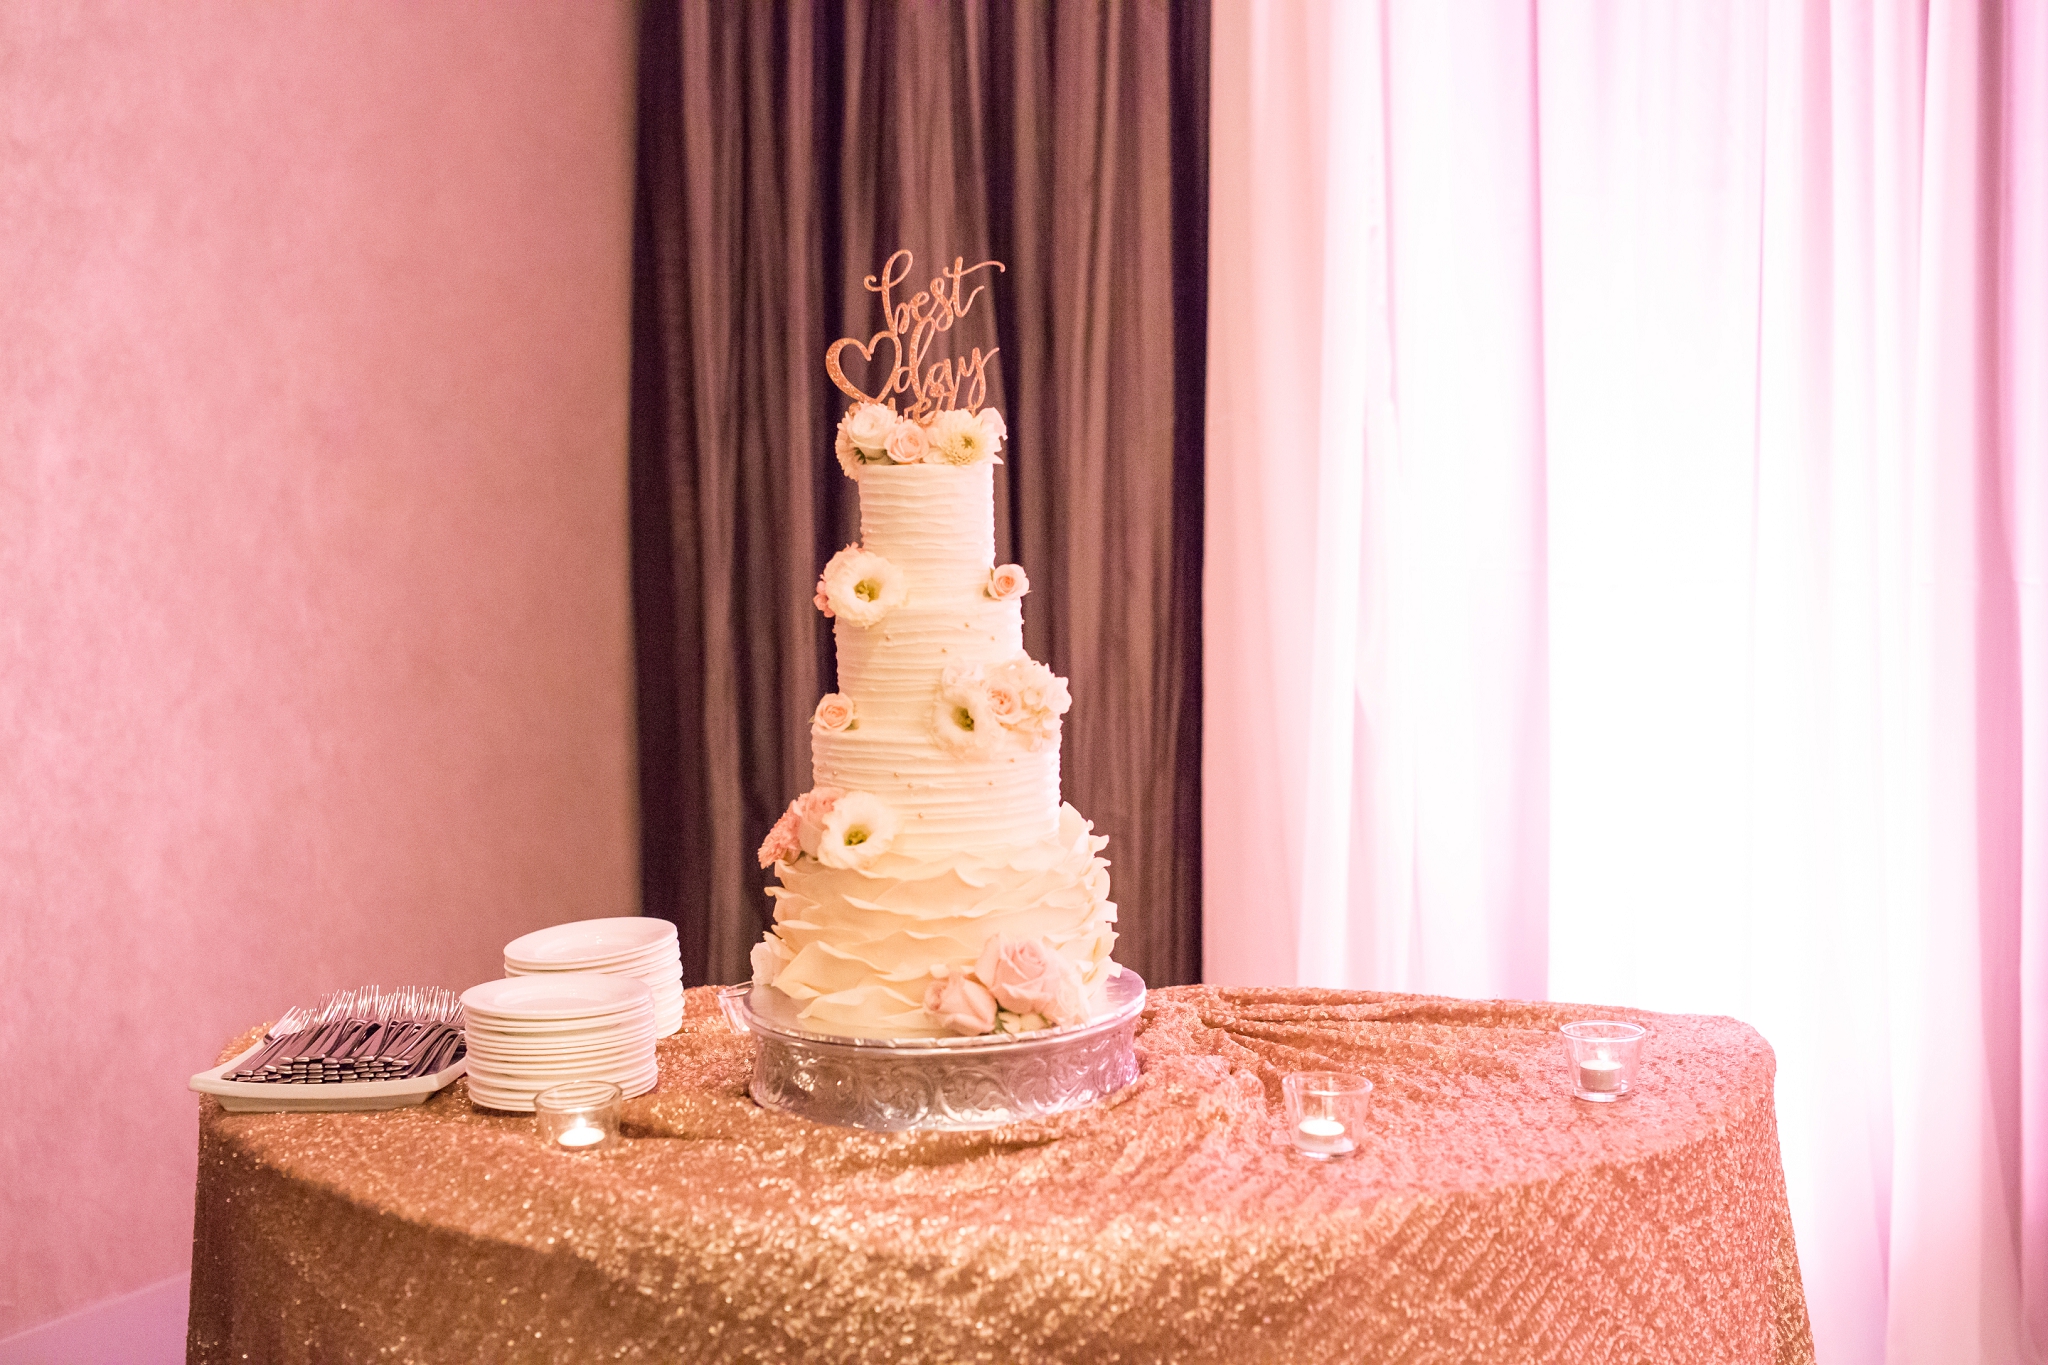 matrix hotel edmonton wedding photos blush and gold wedding decor the art of cake edmonton